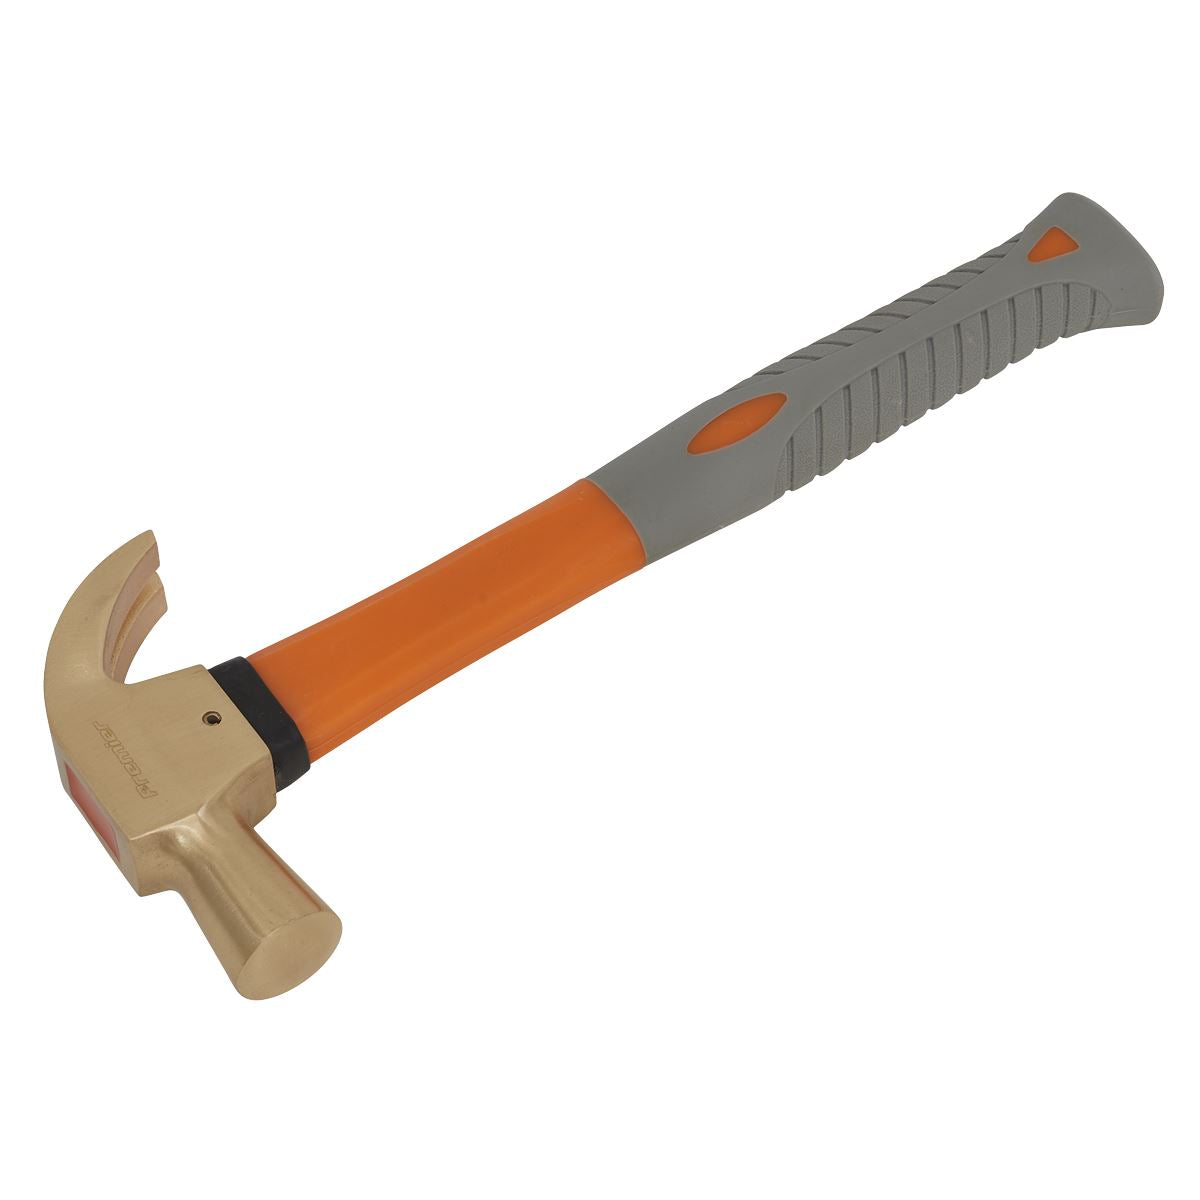 Sealey Premier Claw Hammer 16oz - Non-Sparking